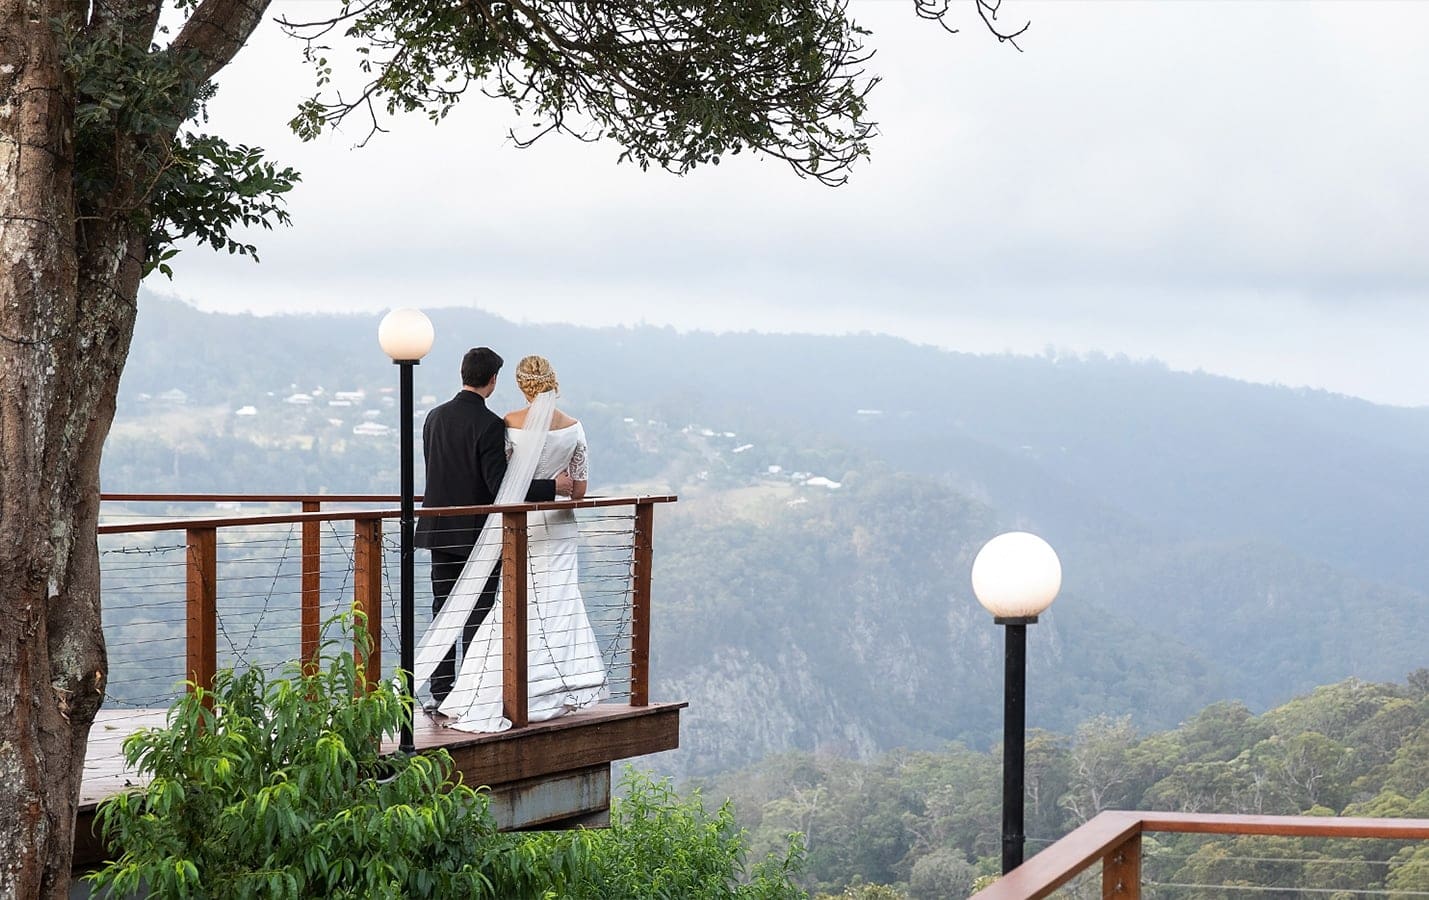 Gold Coast wedding photographer, Mooi Photography is at St Bernard's Hotel, Tamborine Mountain.